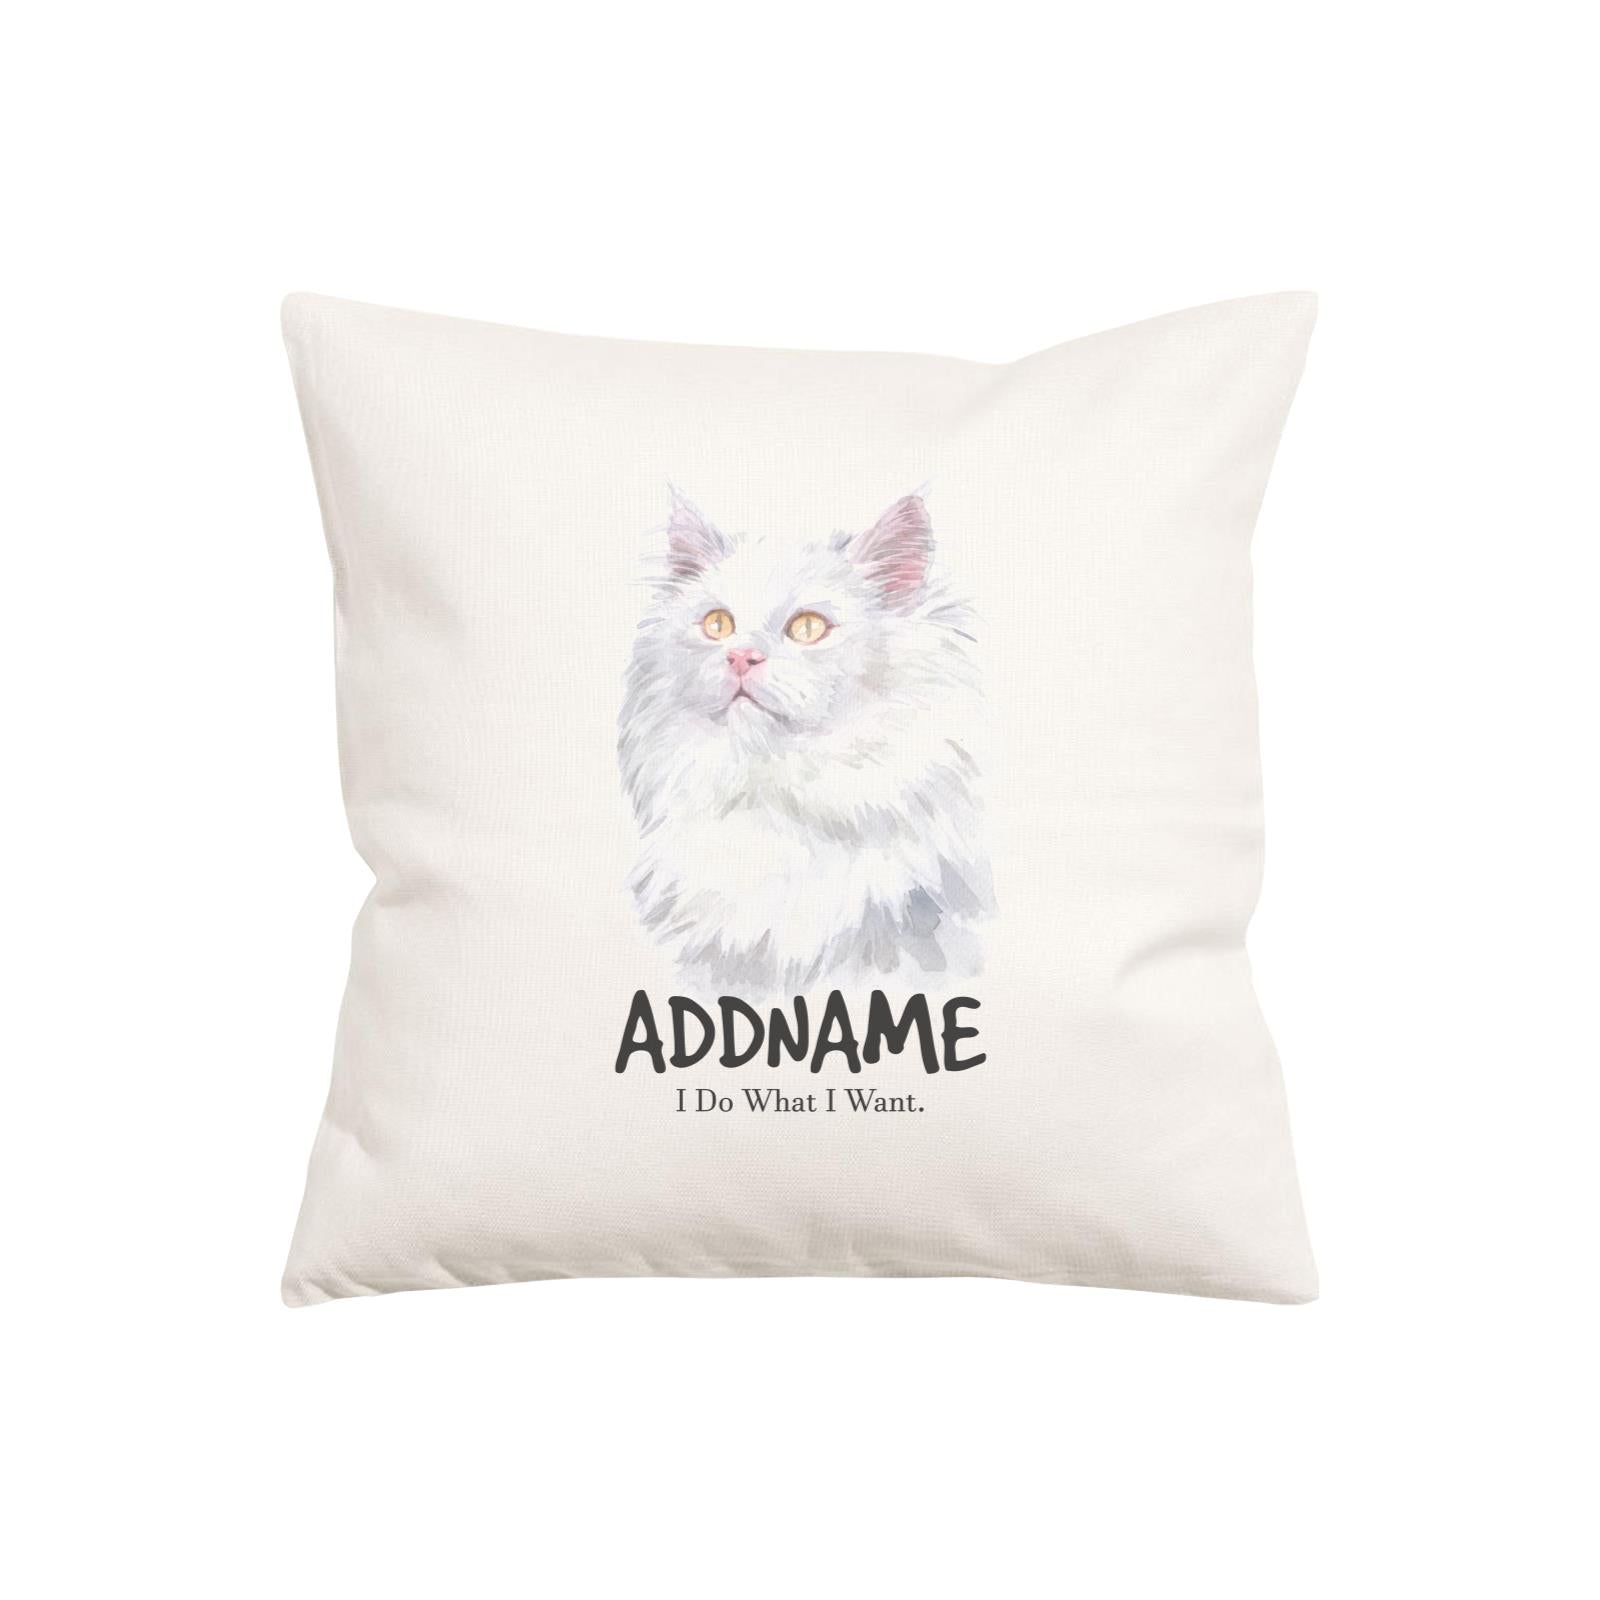 Watercolor Cat Series Deutsch langhaar I Do What I Want Addname Pillow Cushion